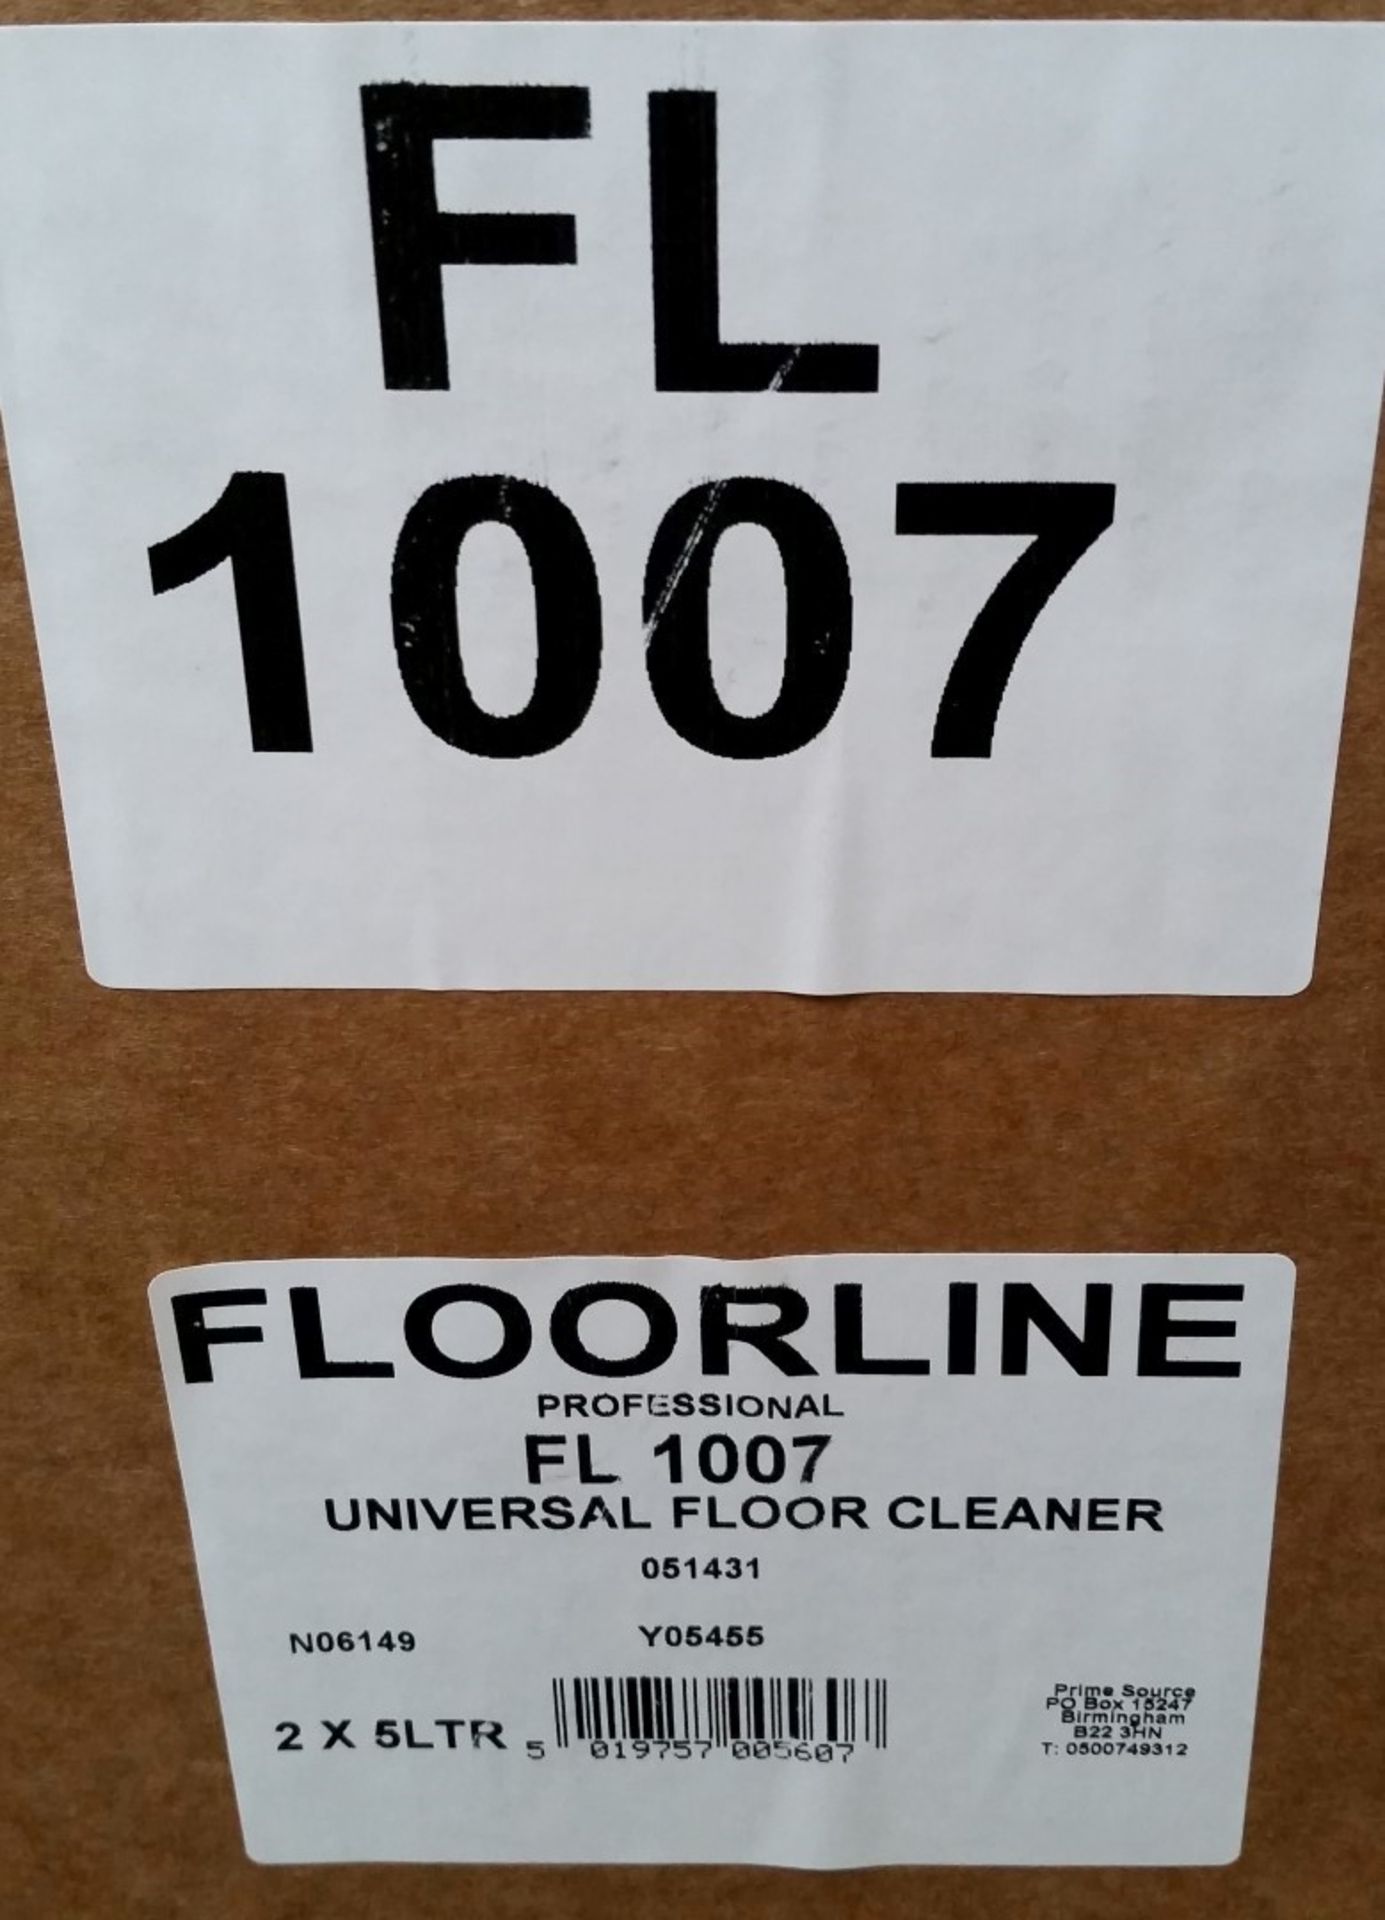 2 x Floor Line Professional 5 Litre Universal Floor Cleaner - Removes Soil & Heel Marks - Fast & - Image 5 of 7